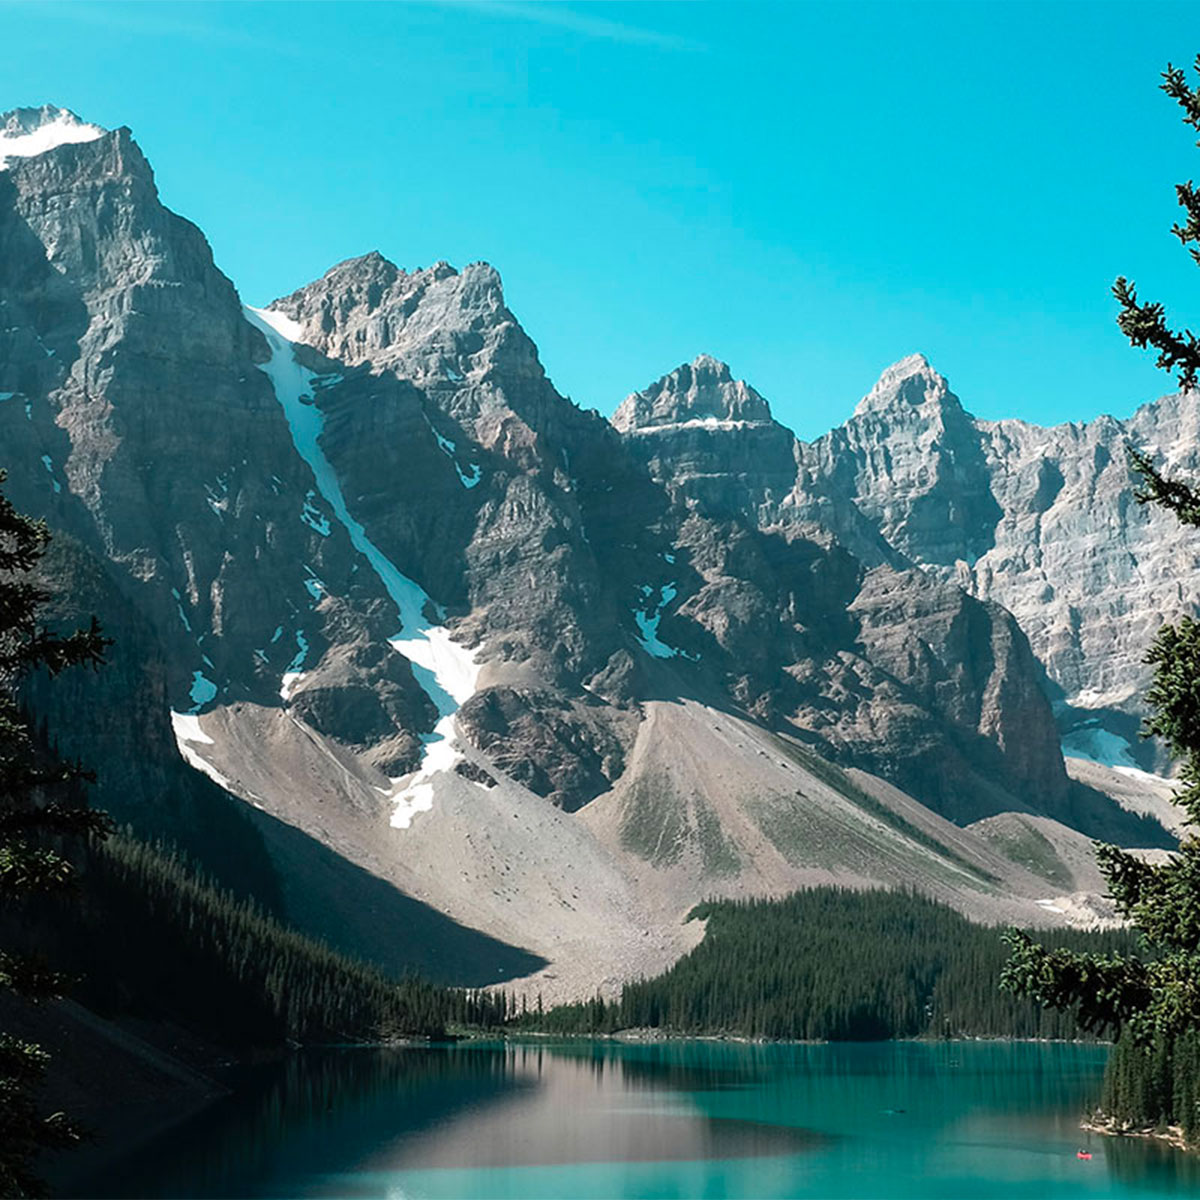 Moraine Lake in Banff National Park